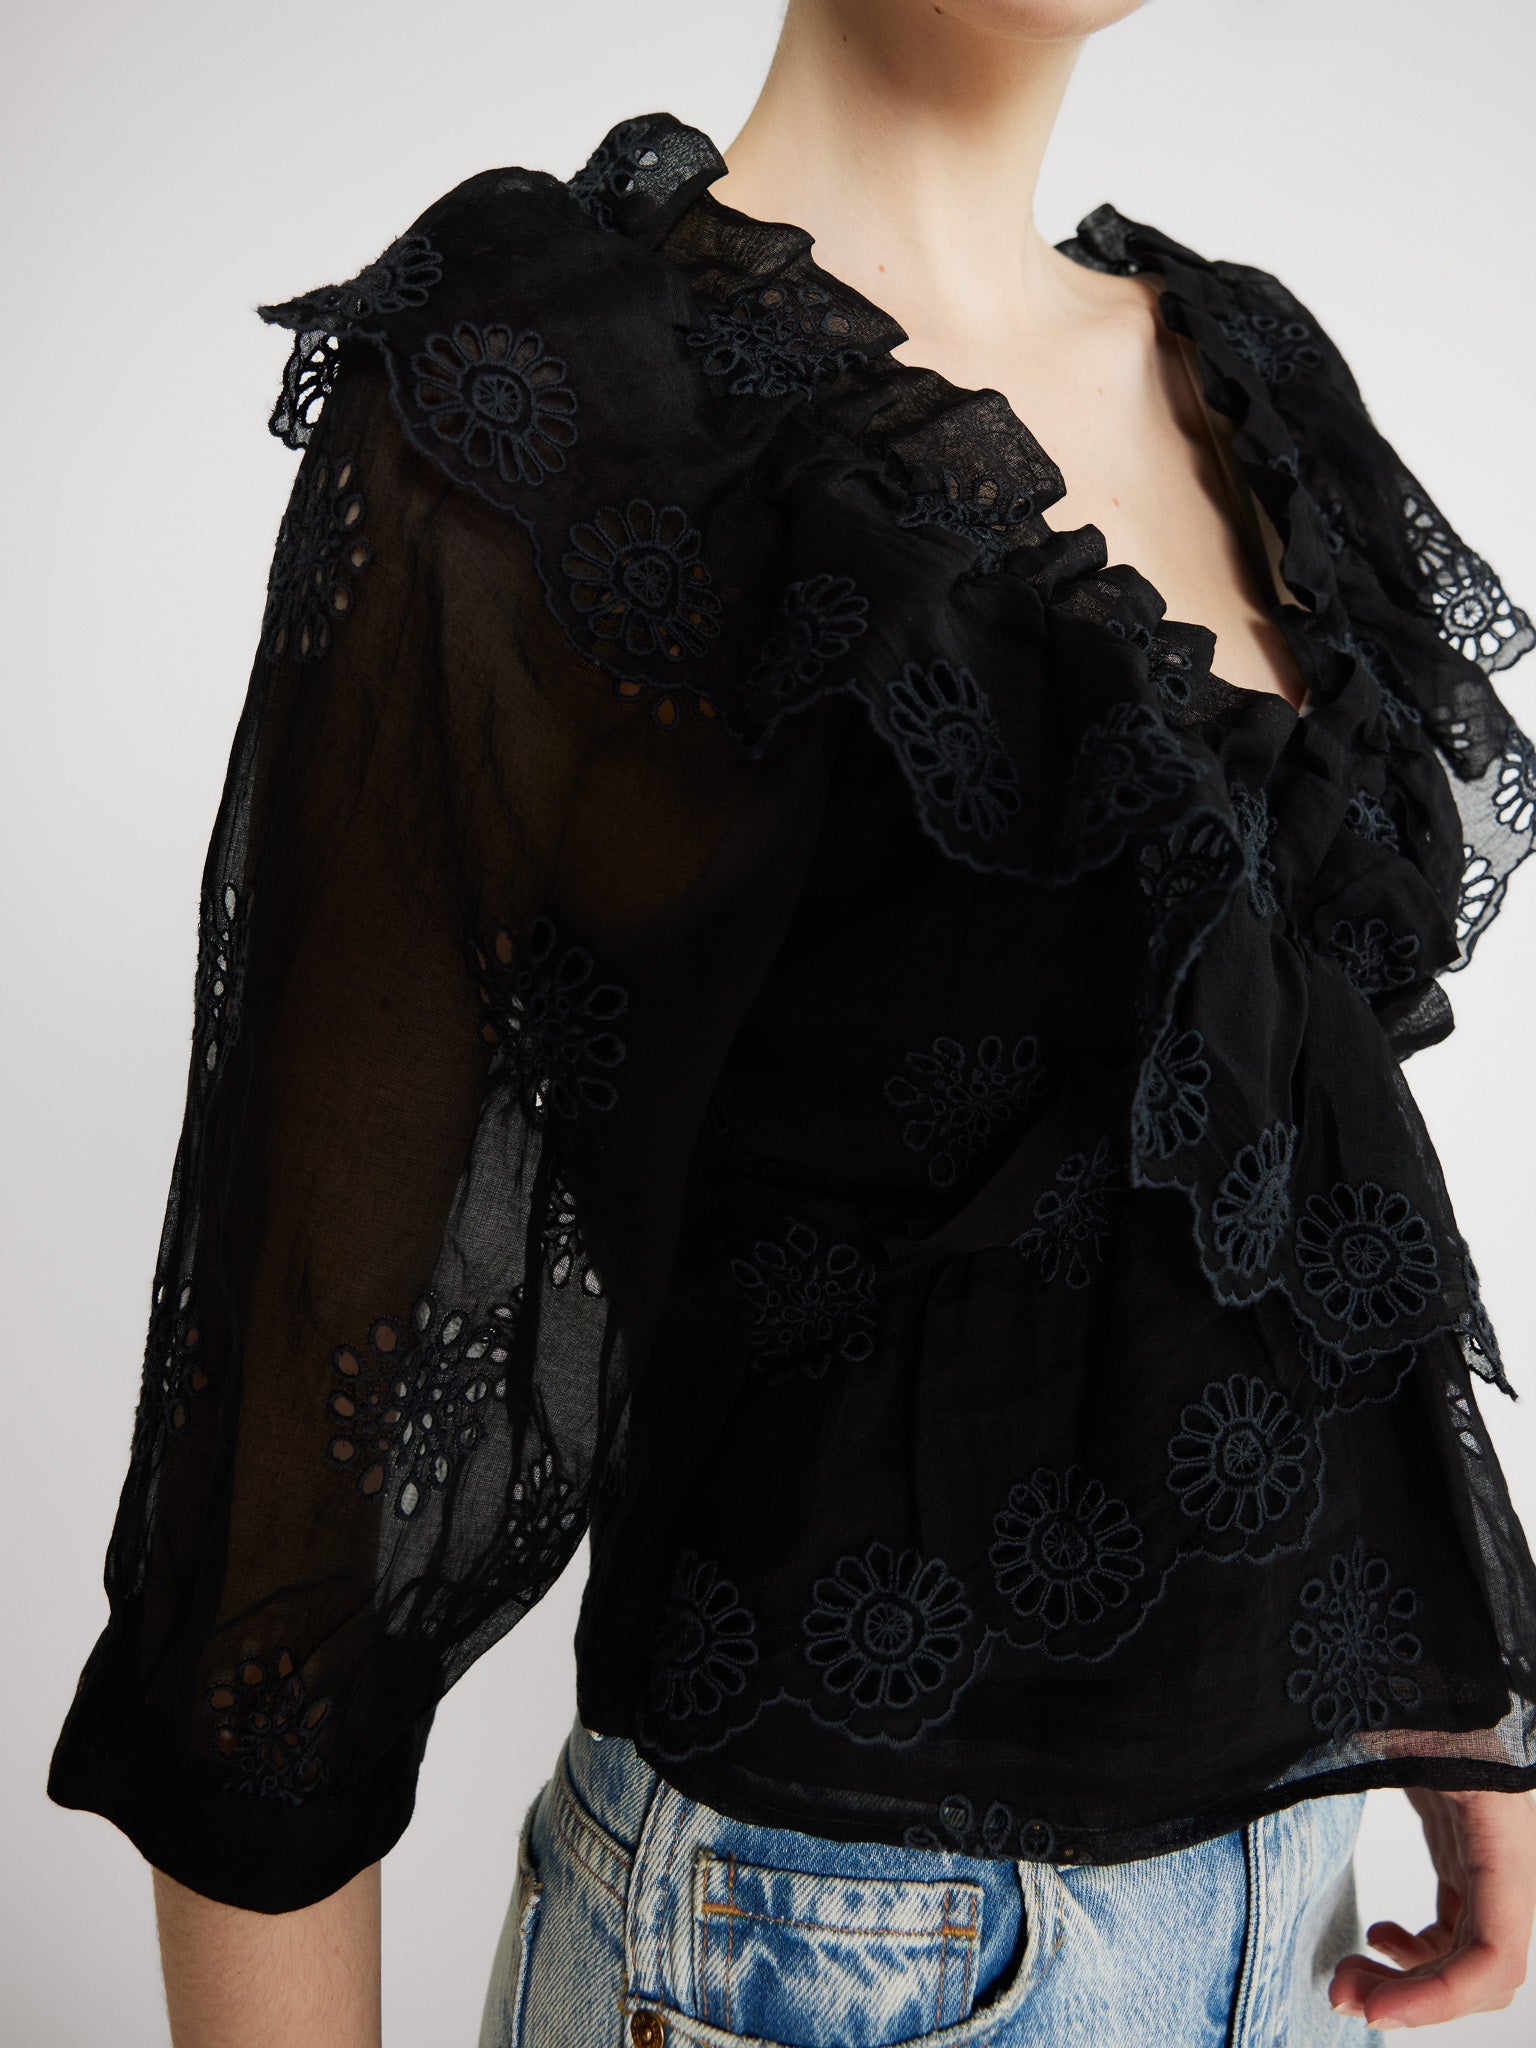 MILLE Clothing Isabella Top in Black Organza Eyelet